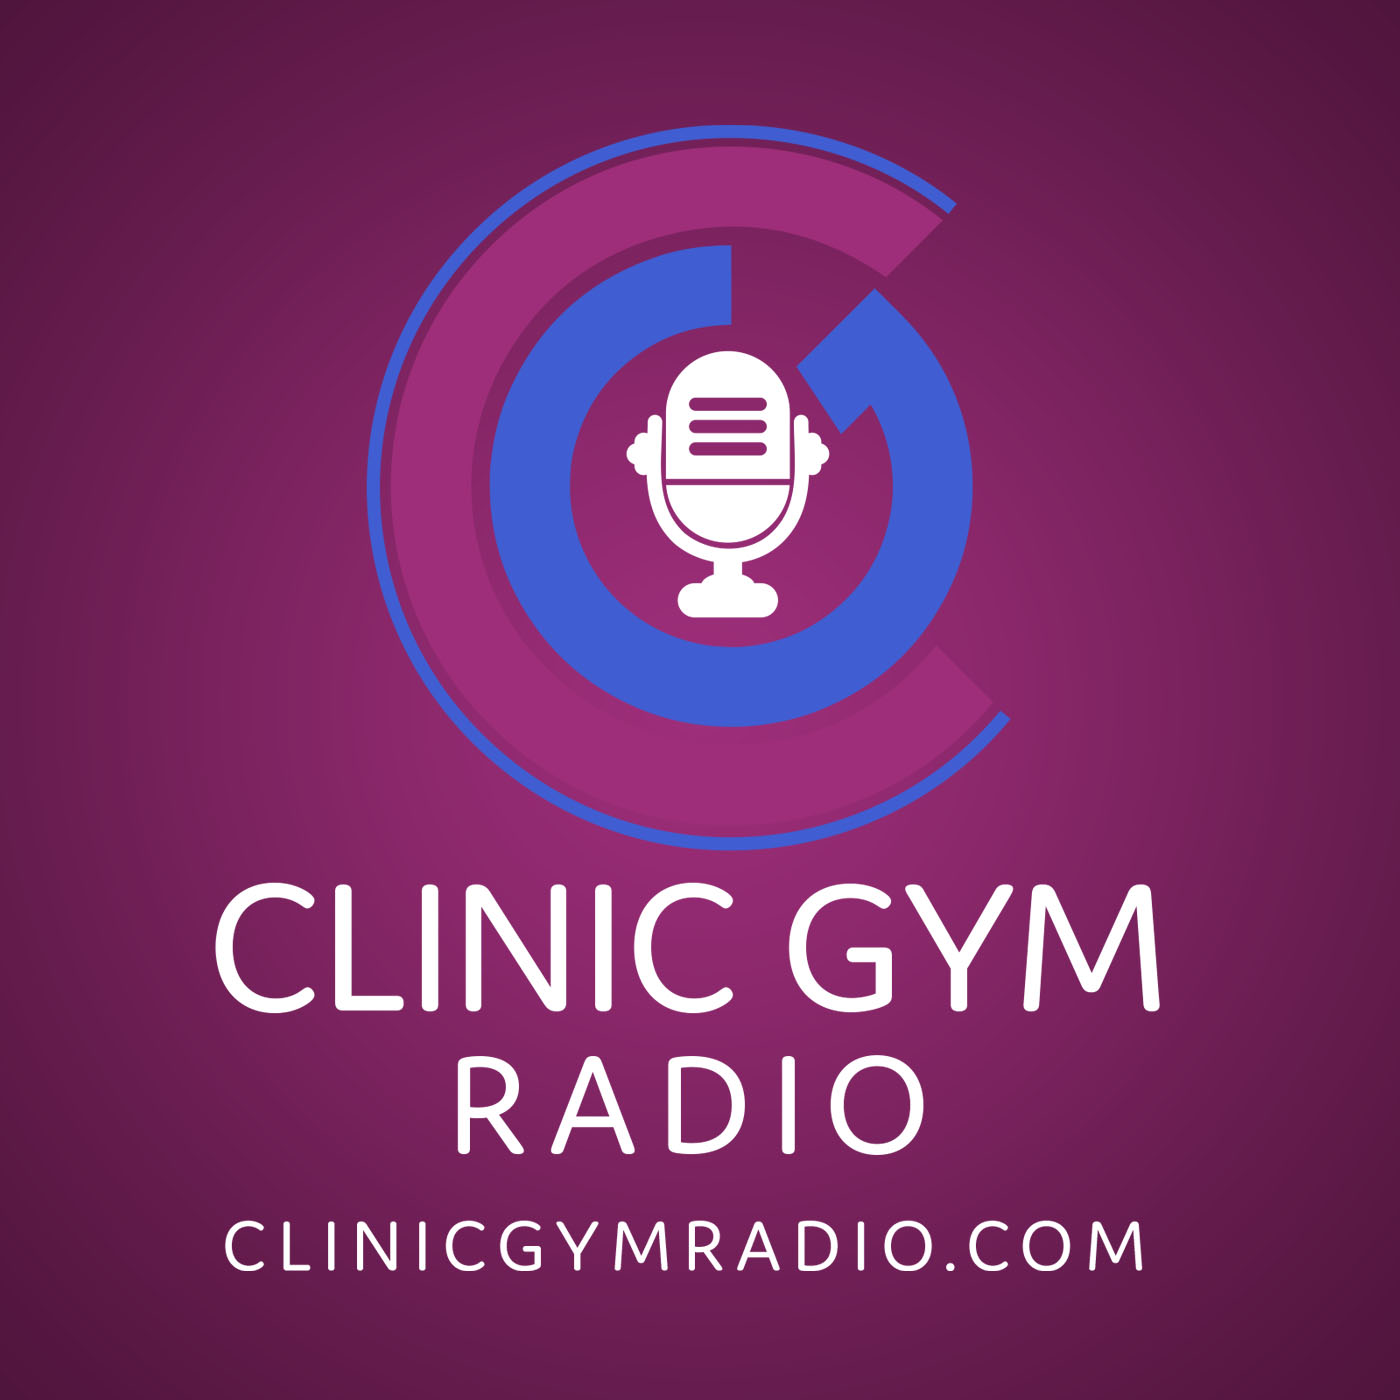 Dan Kleckner Explains All About Clinic Gym KPIs